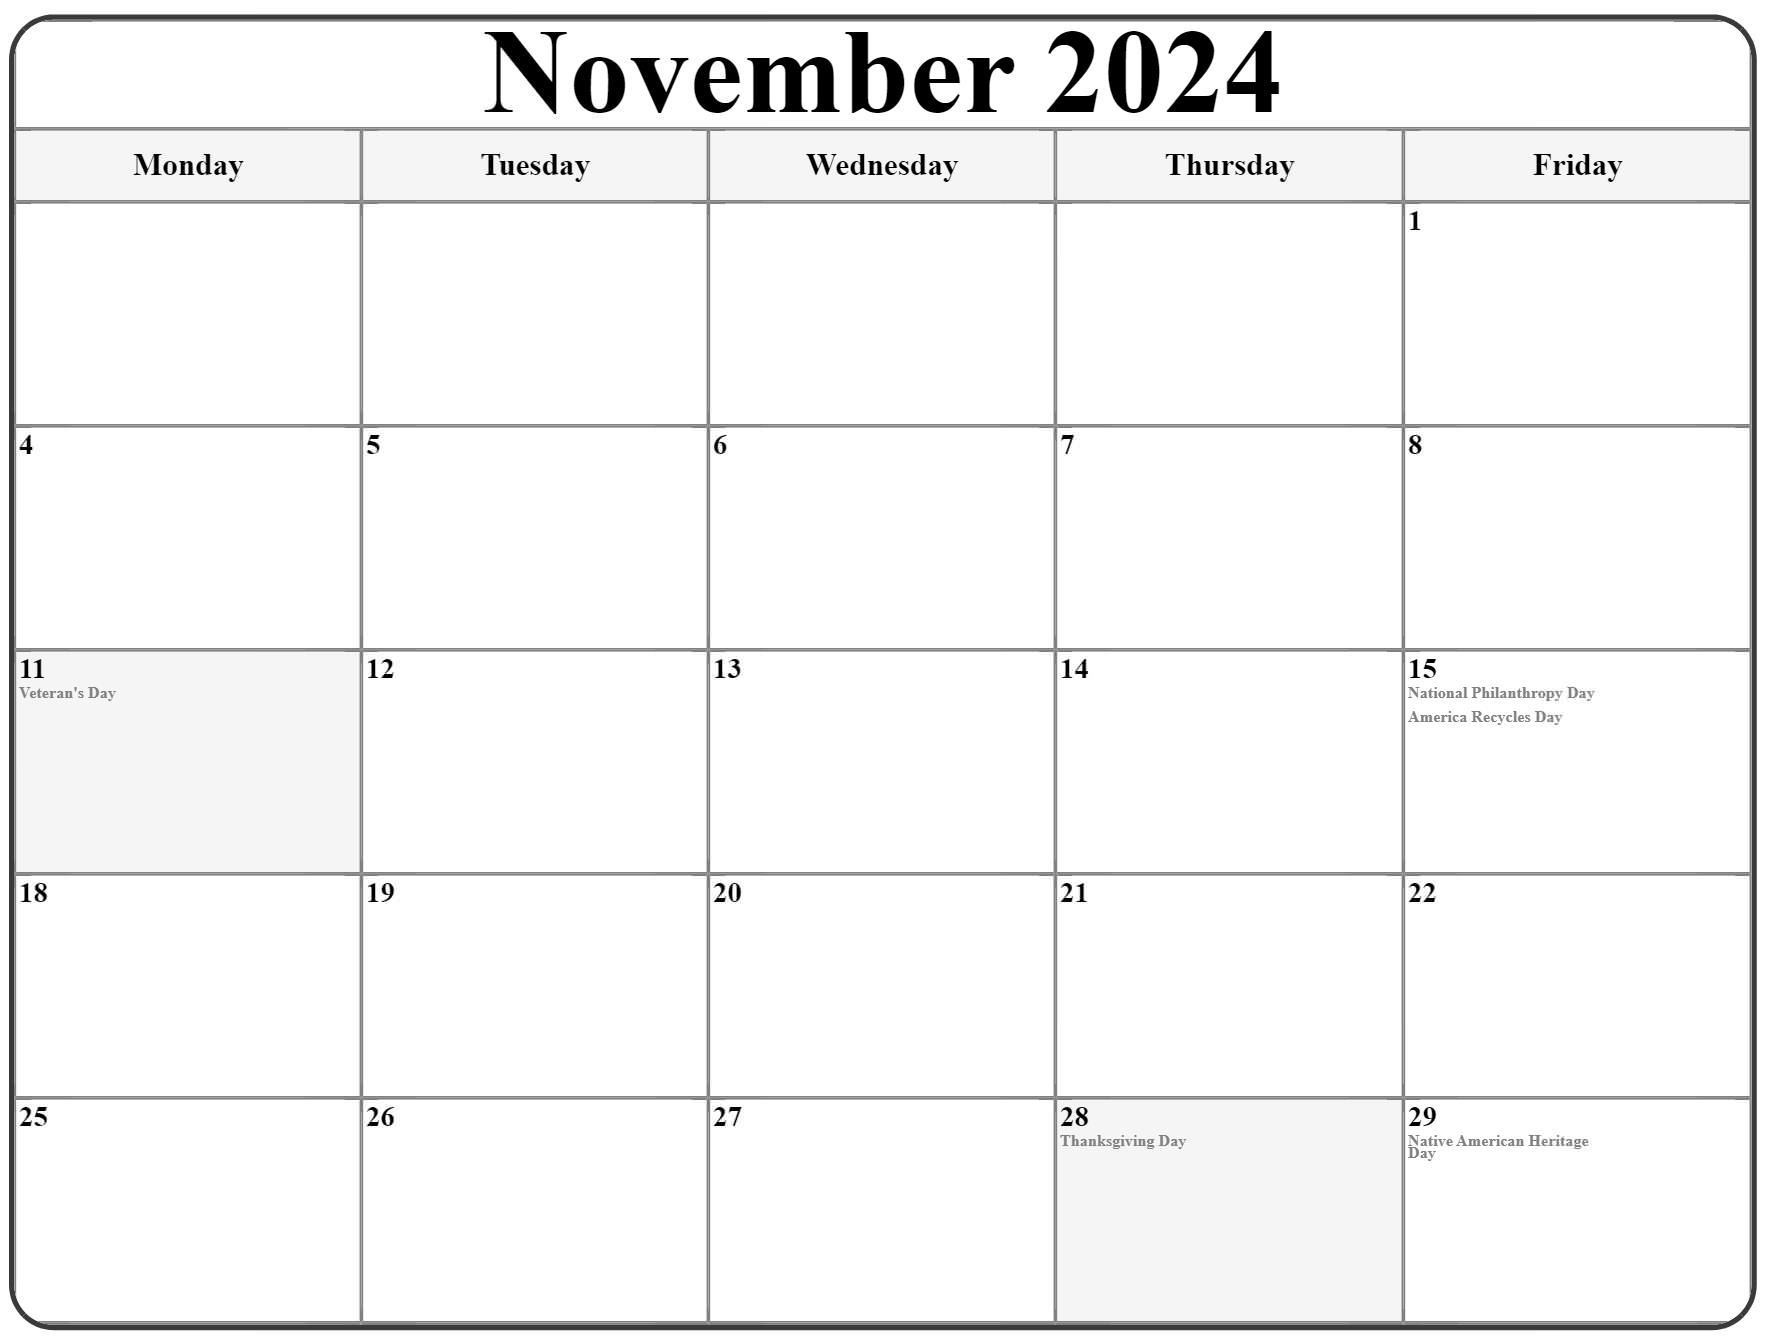 November 2020 Monday Calendar Monday to Sunday